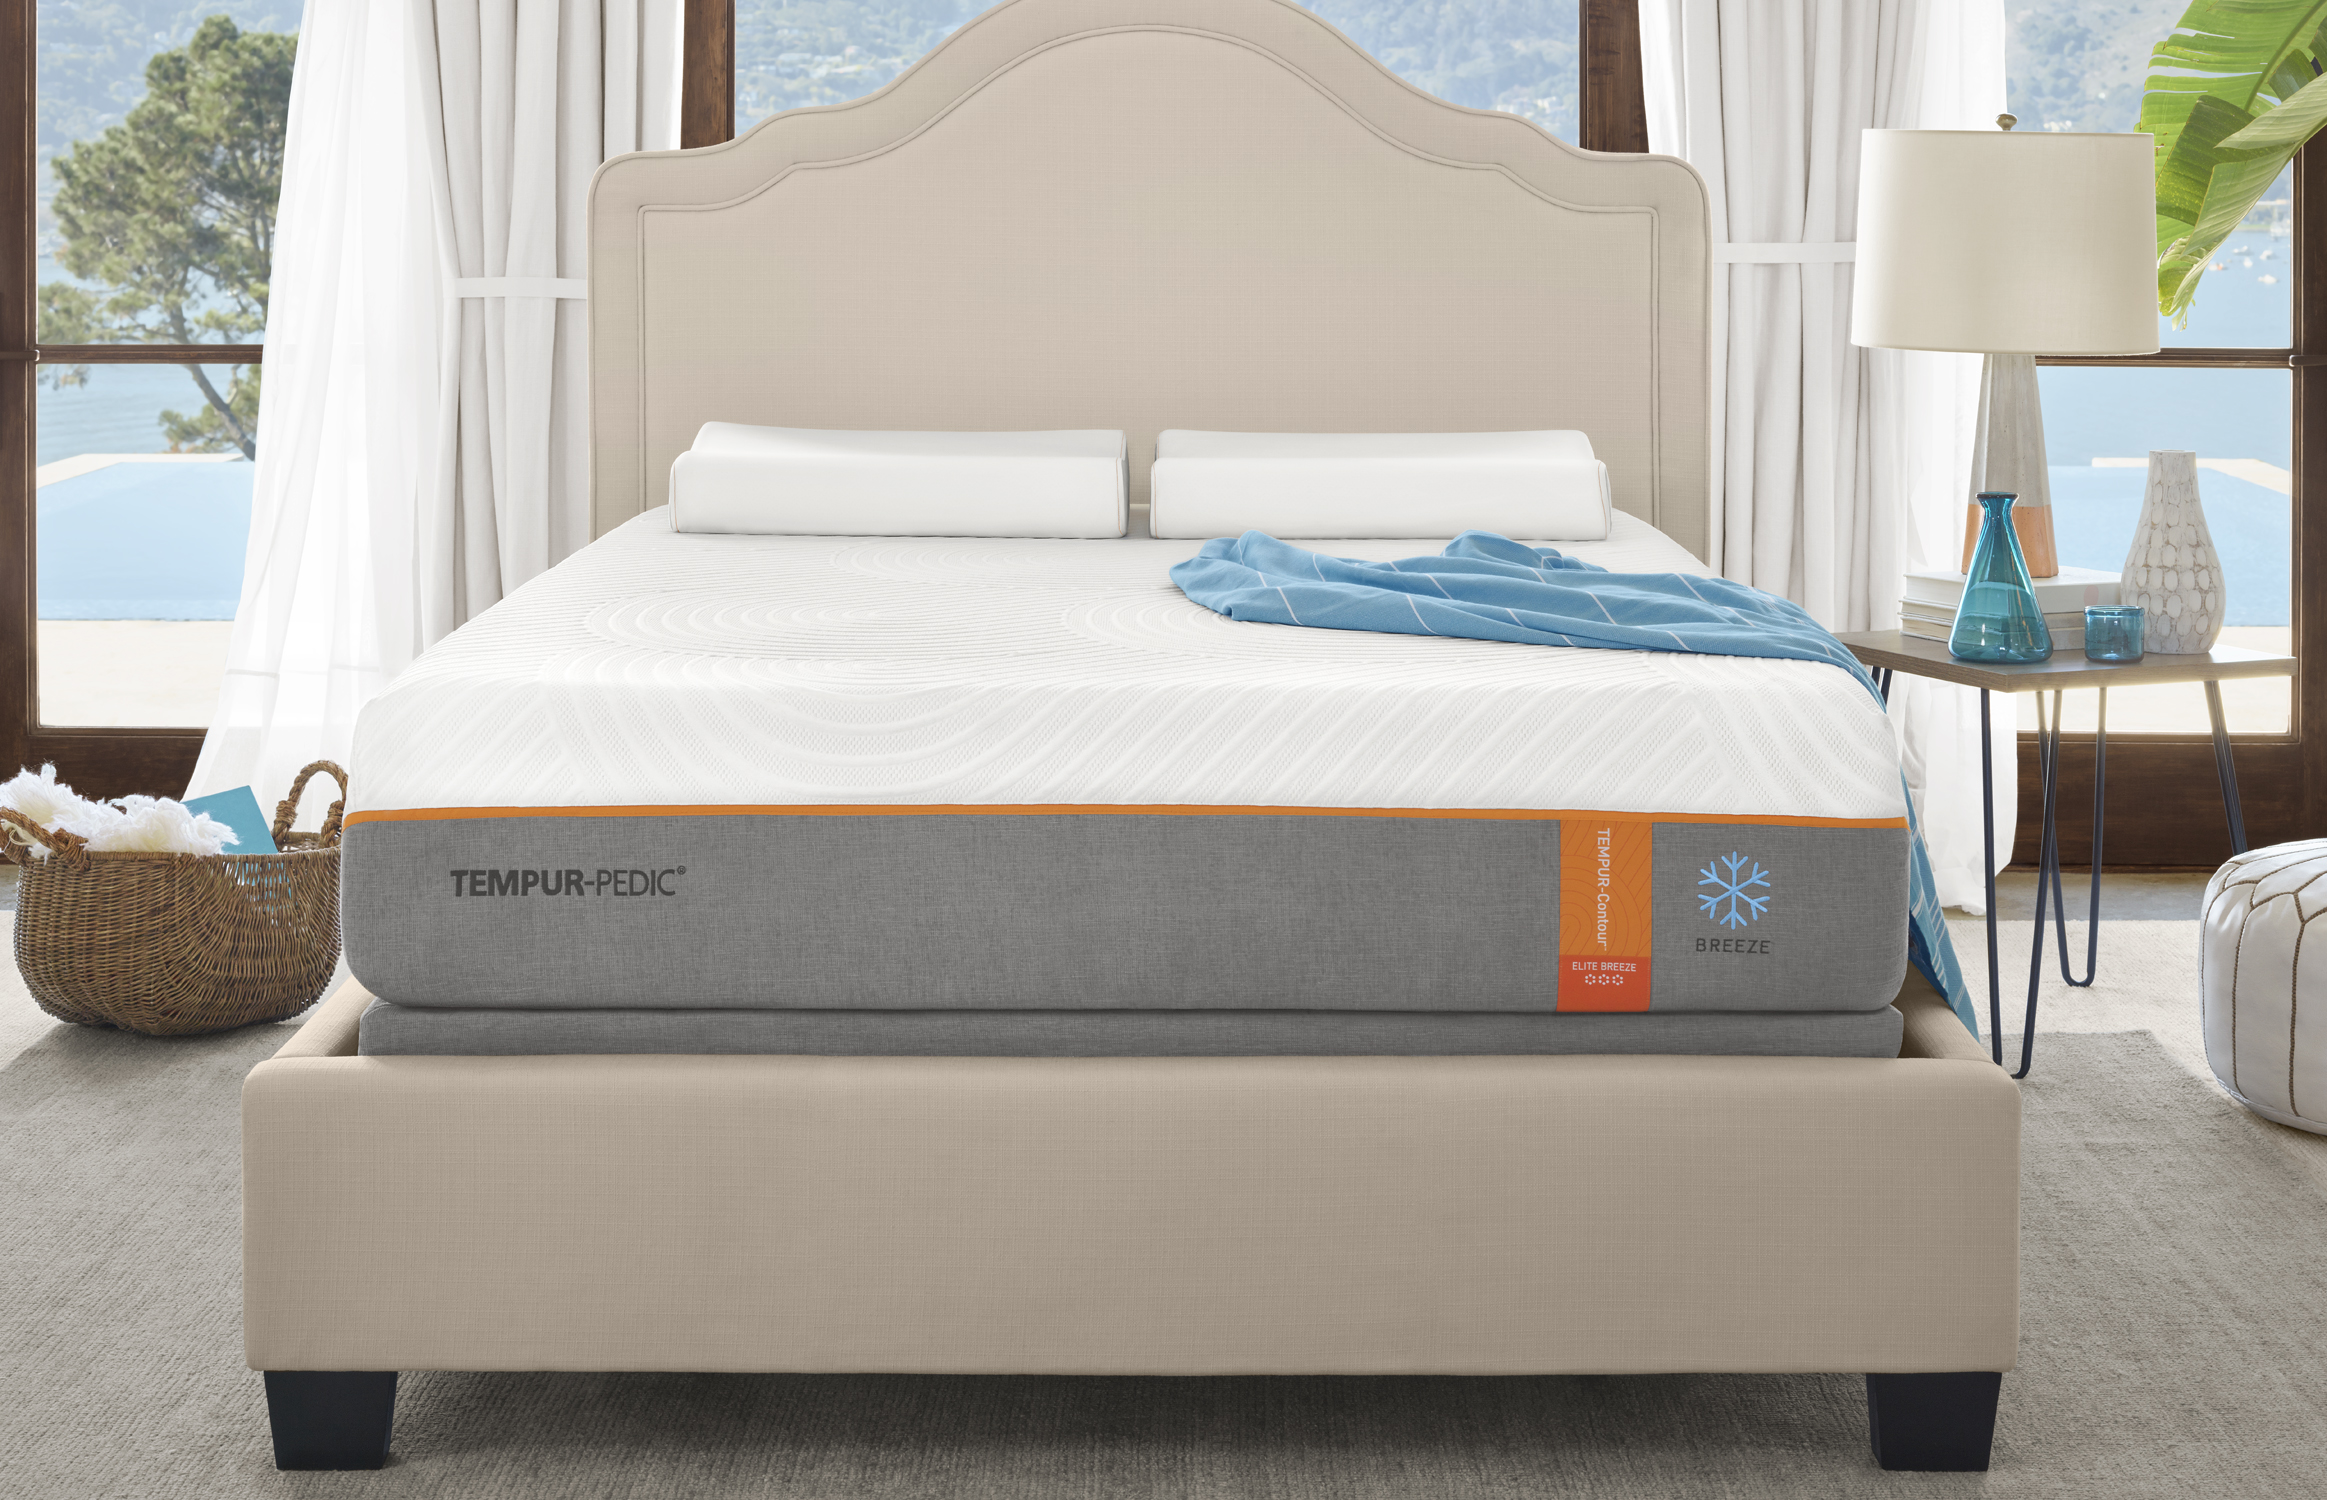 tempurpedic cooling mattress review